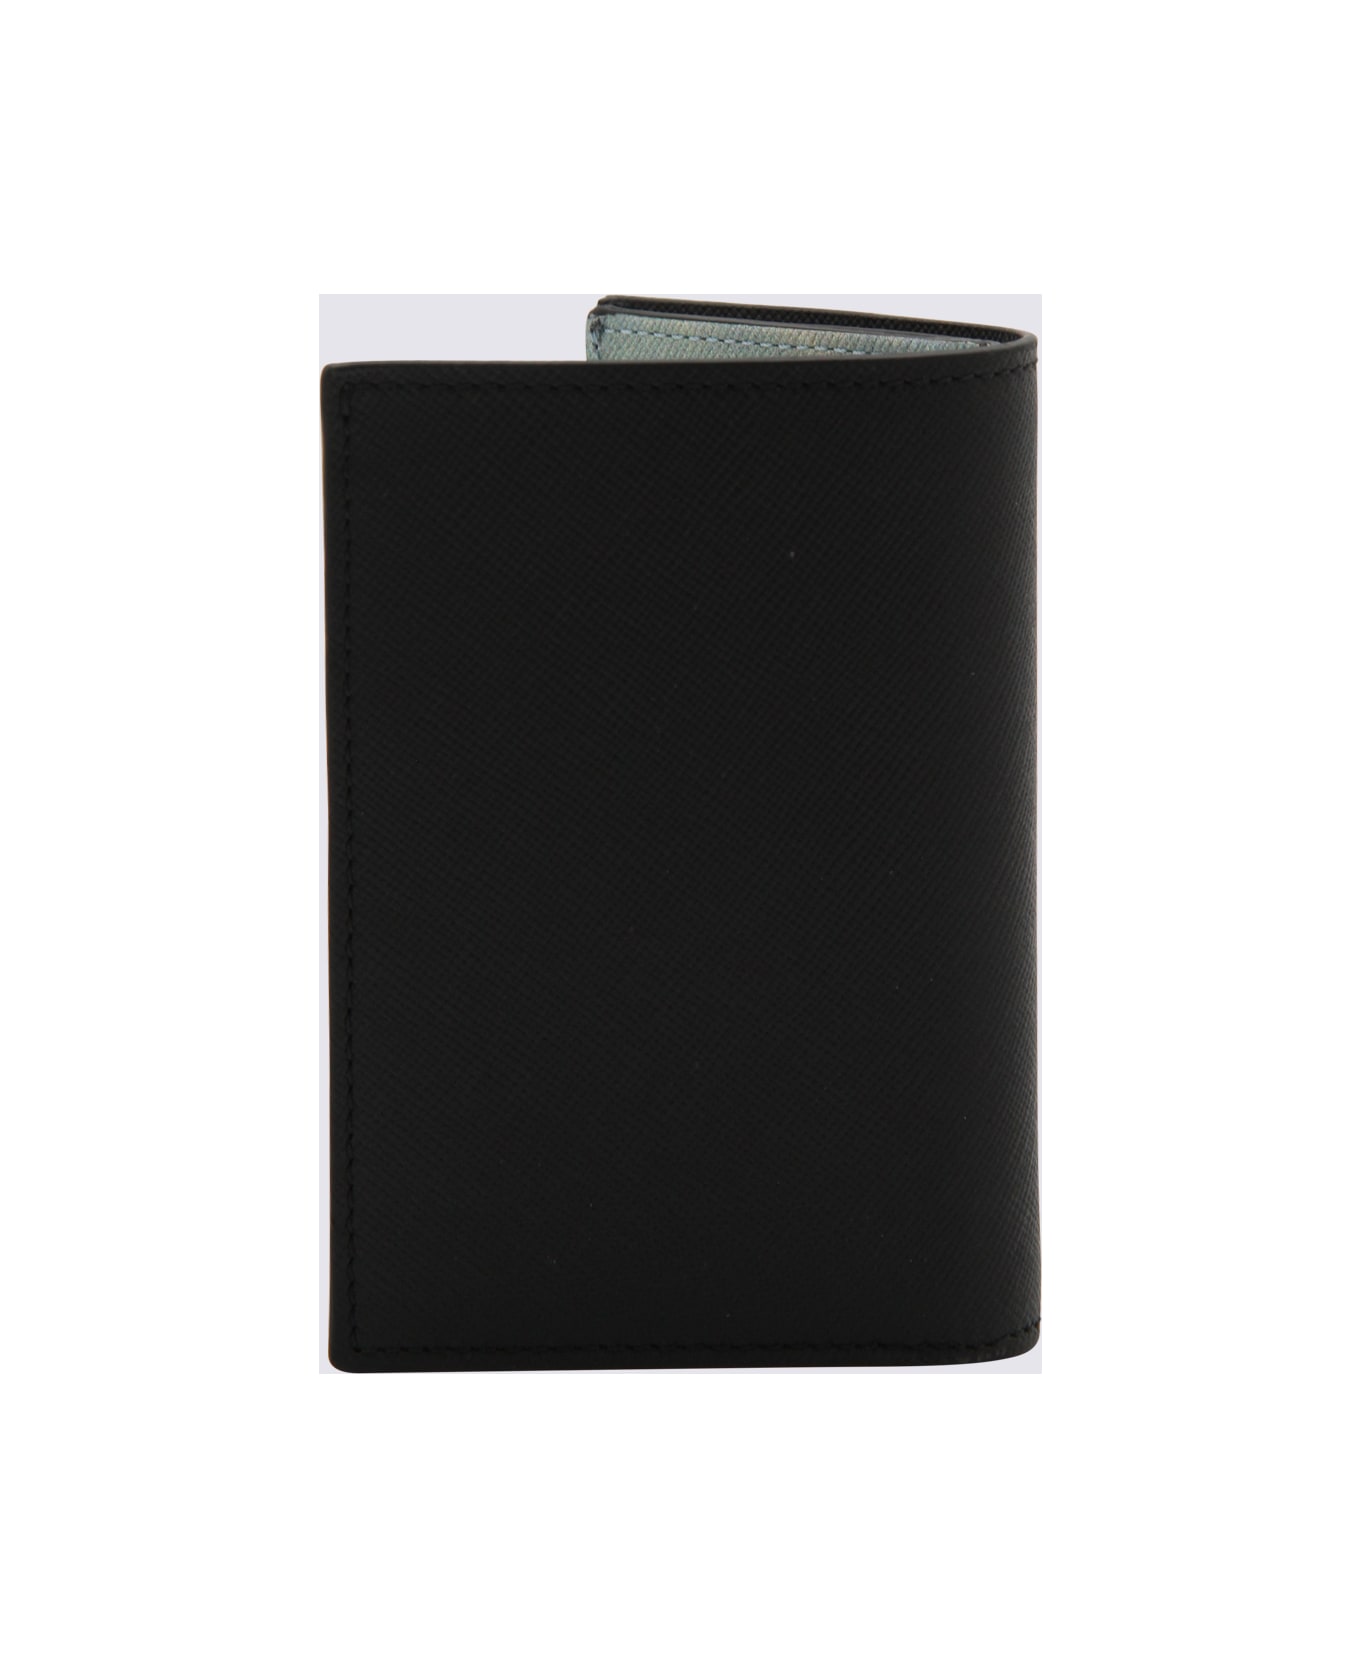 Paul Smith Black Multicolour Leather Cardholder - Black 財布